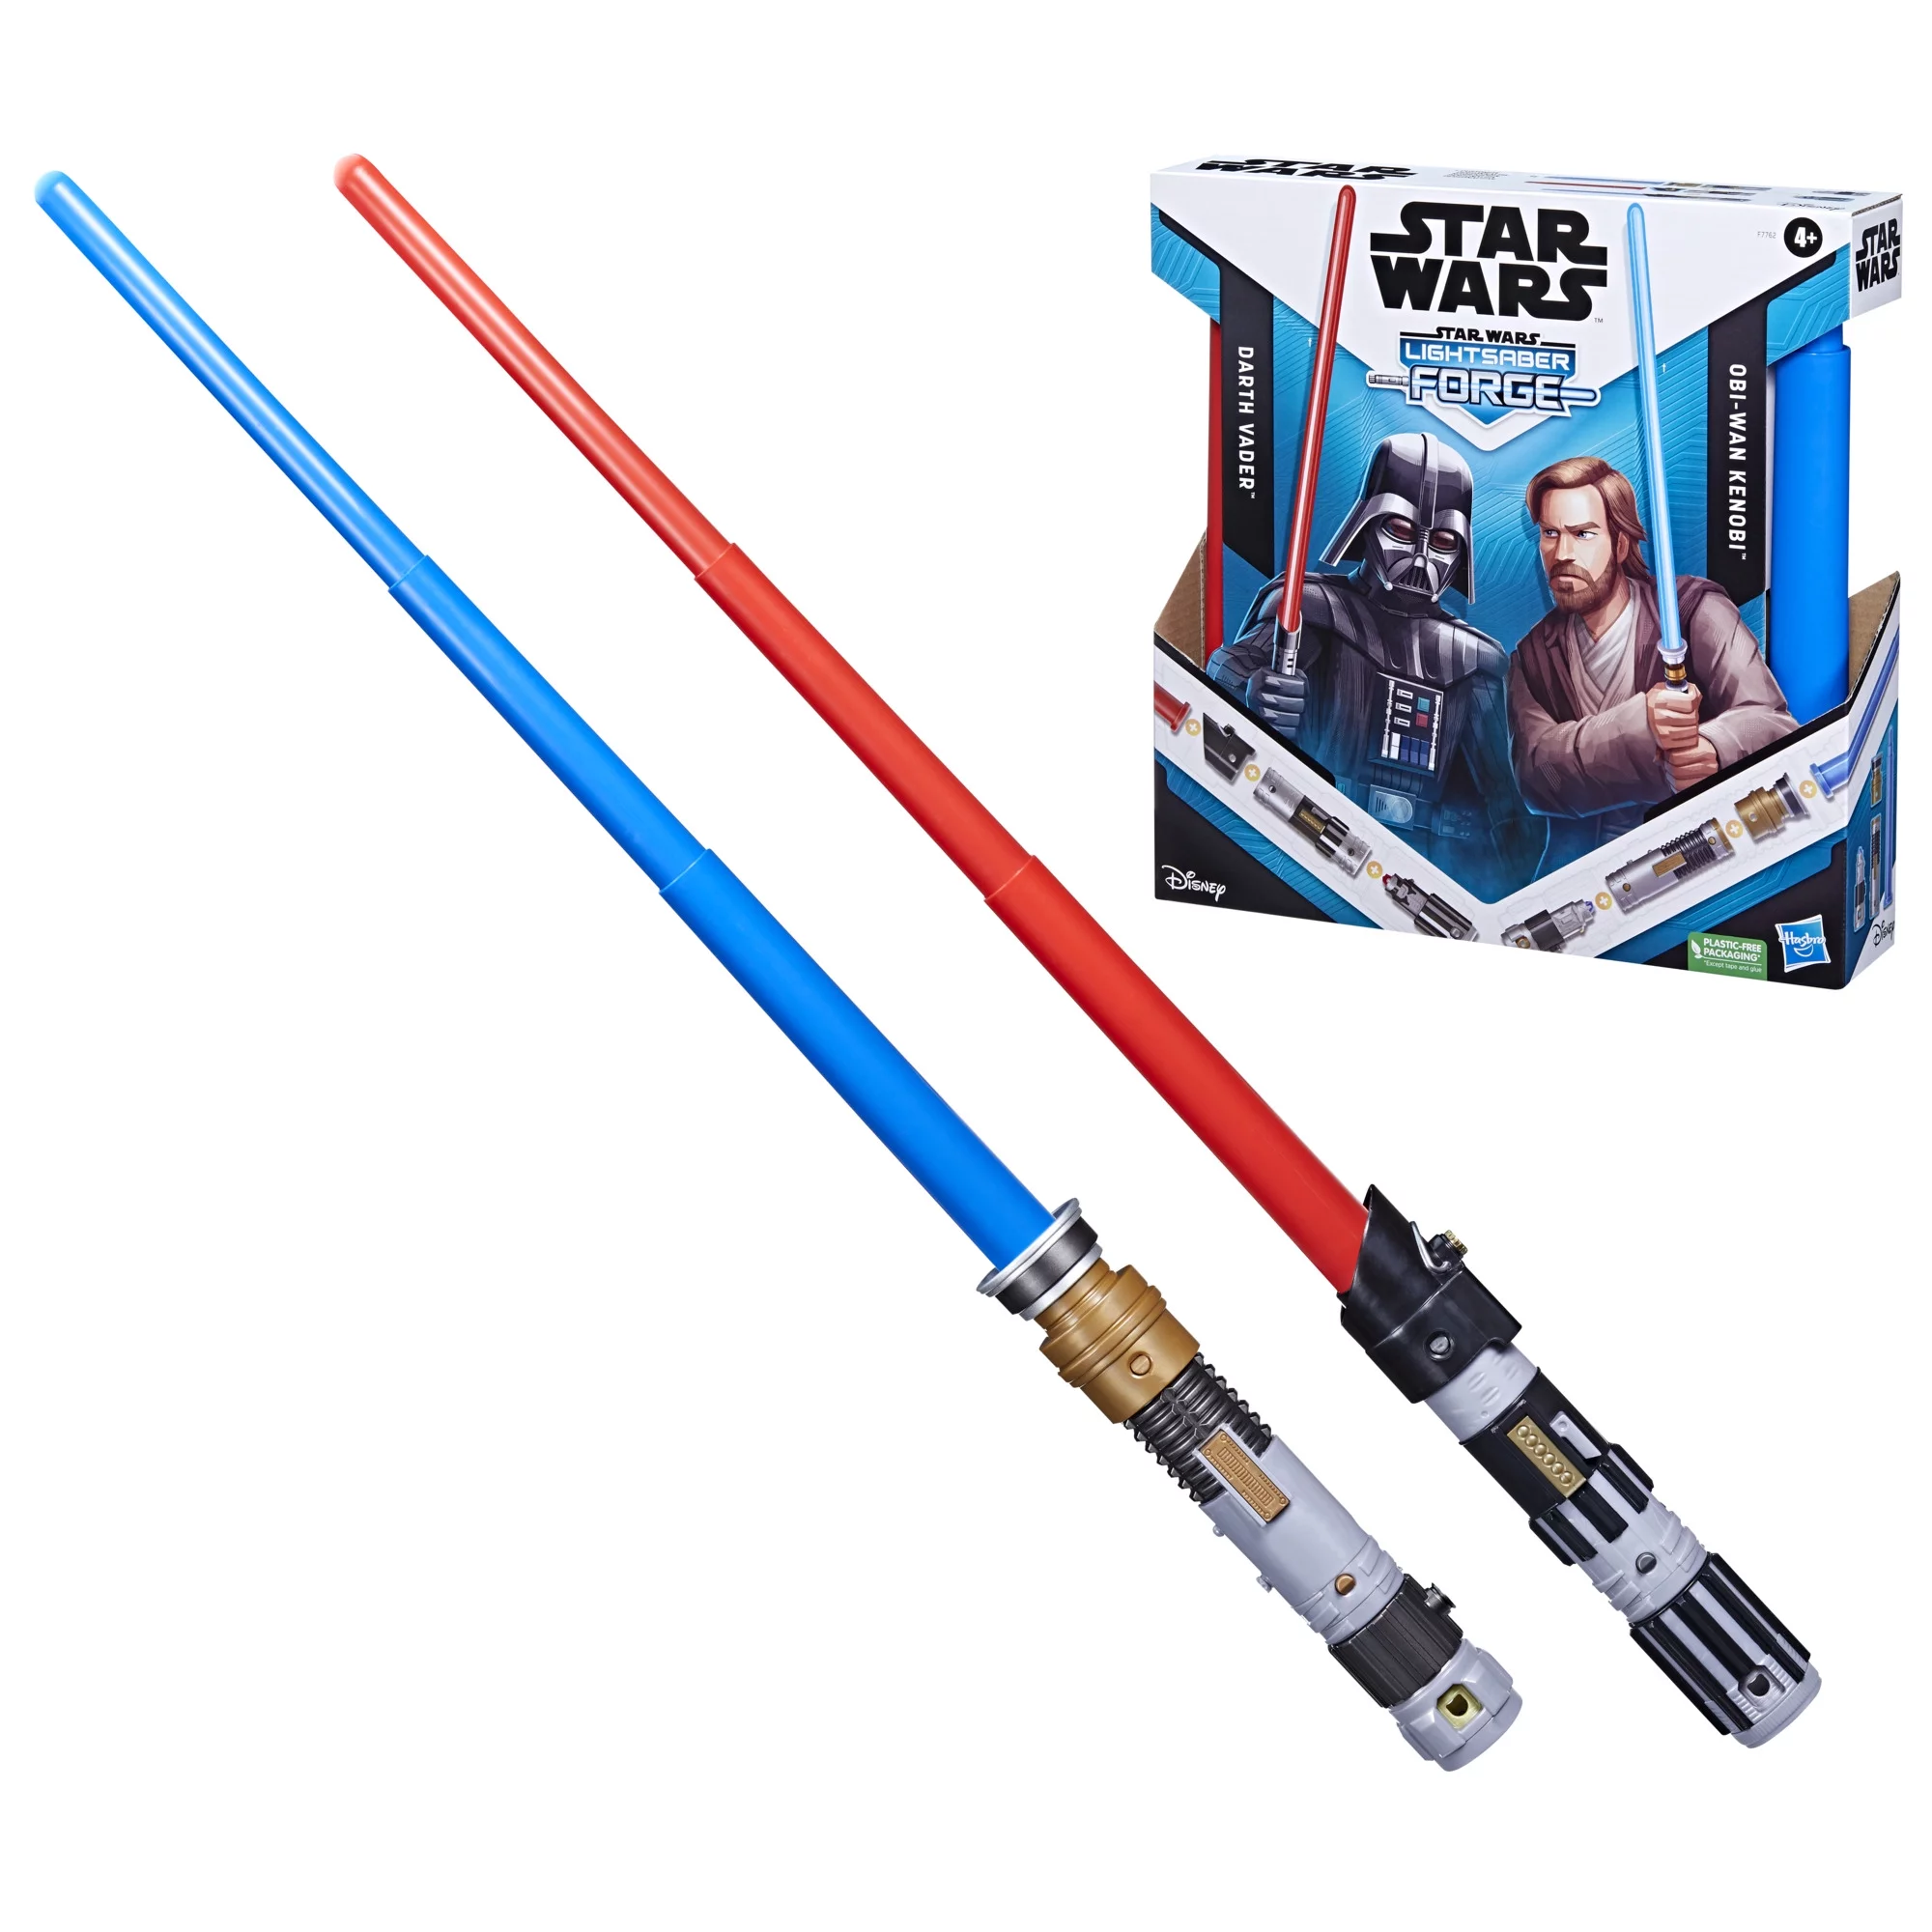 Star Wars Lightsaber Forge Darth Vader Vs. Obi-Wan Kenobi, Star Wars Toys for Kids